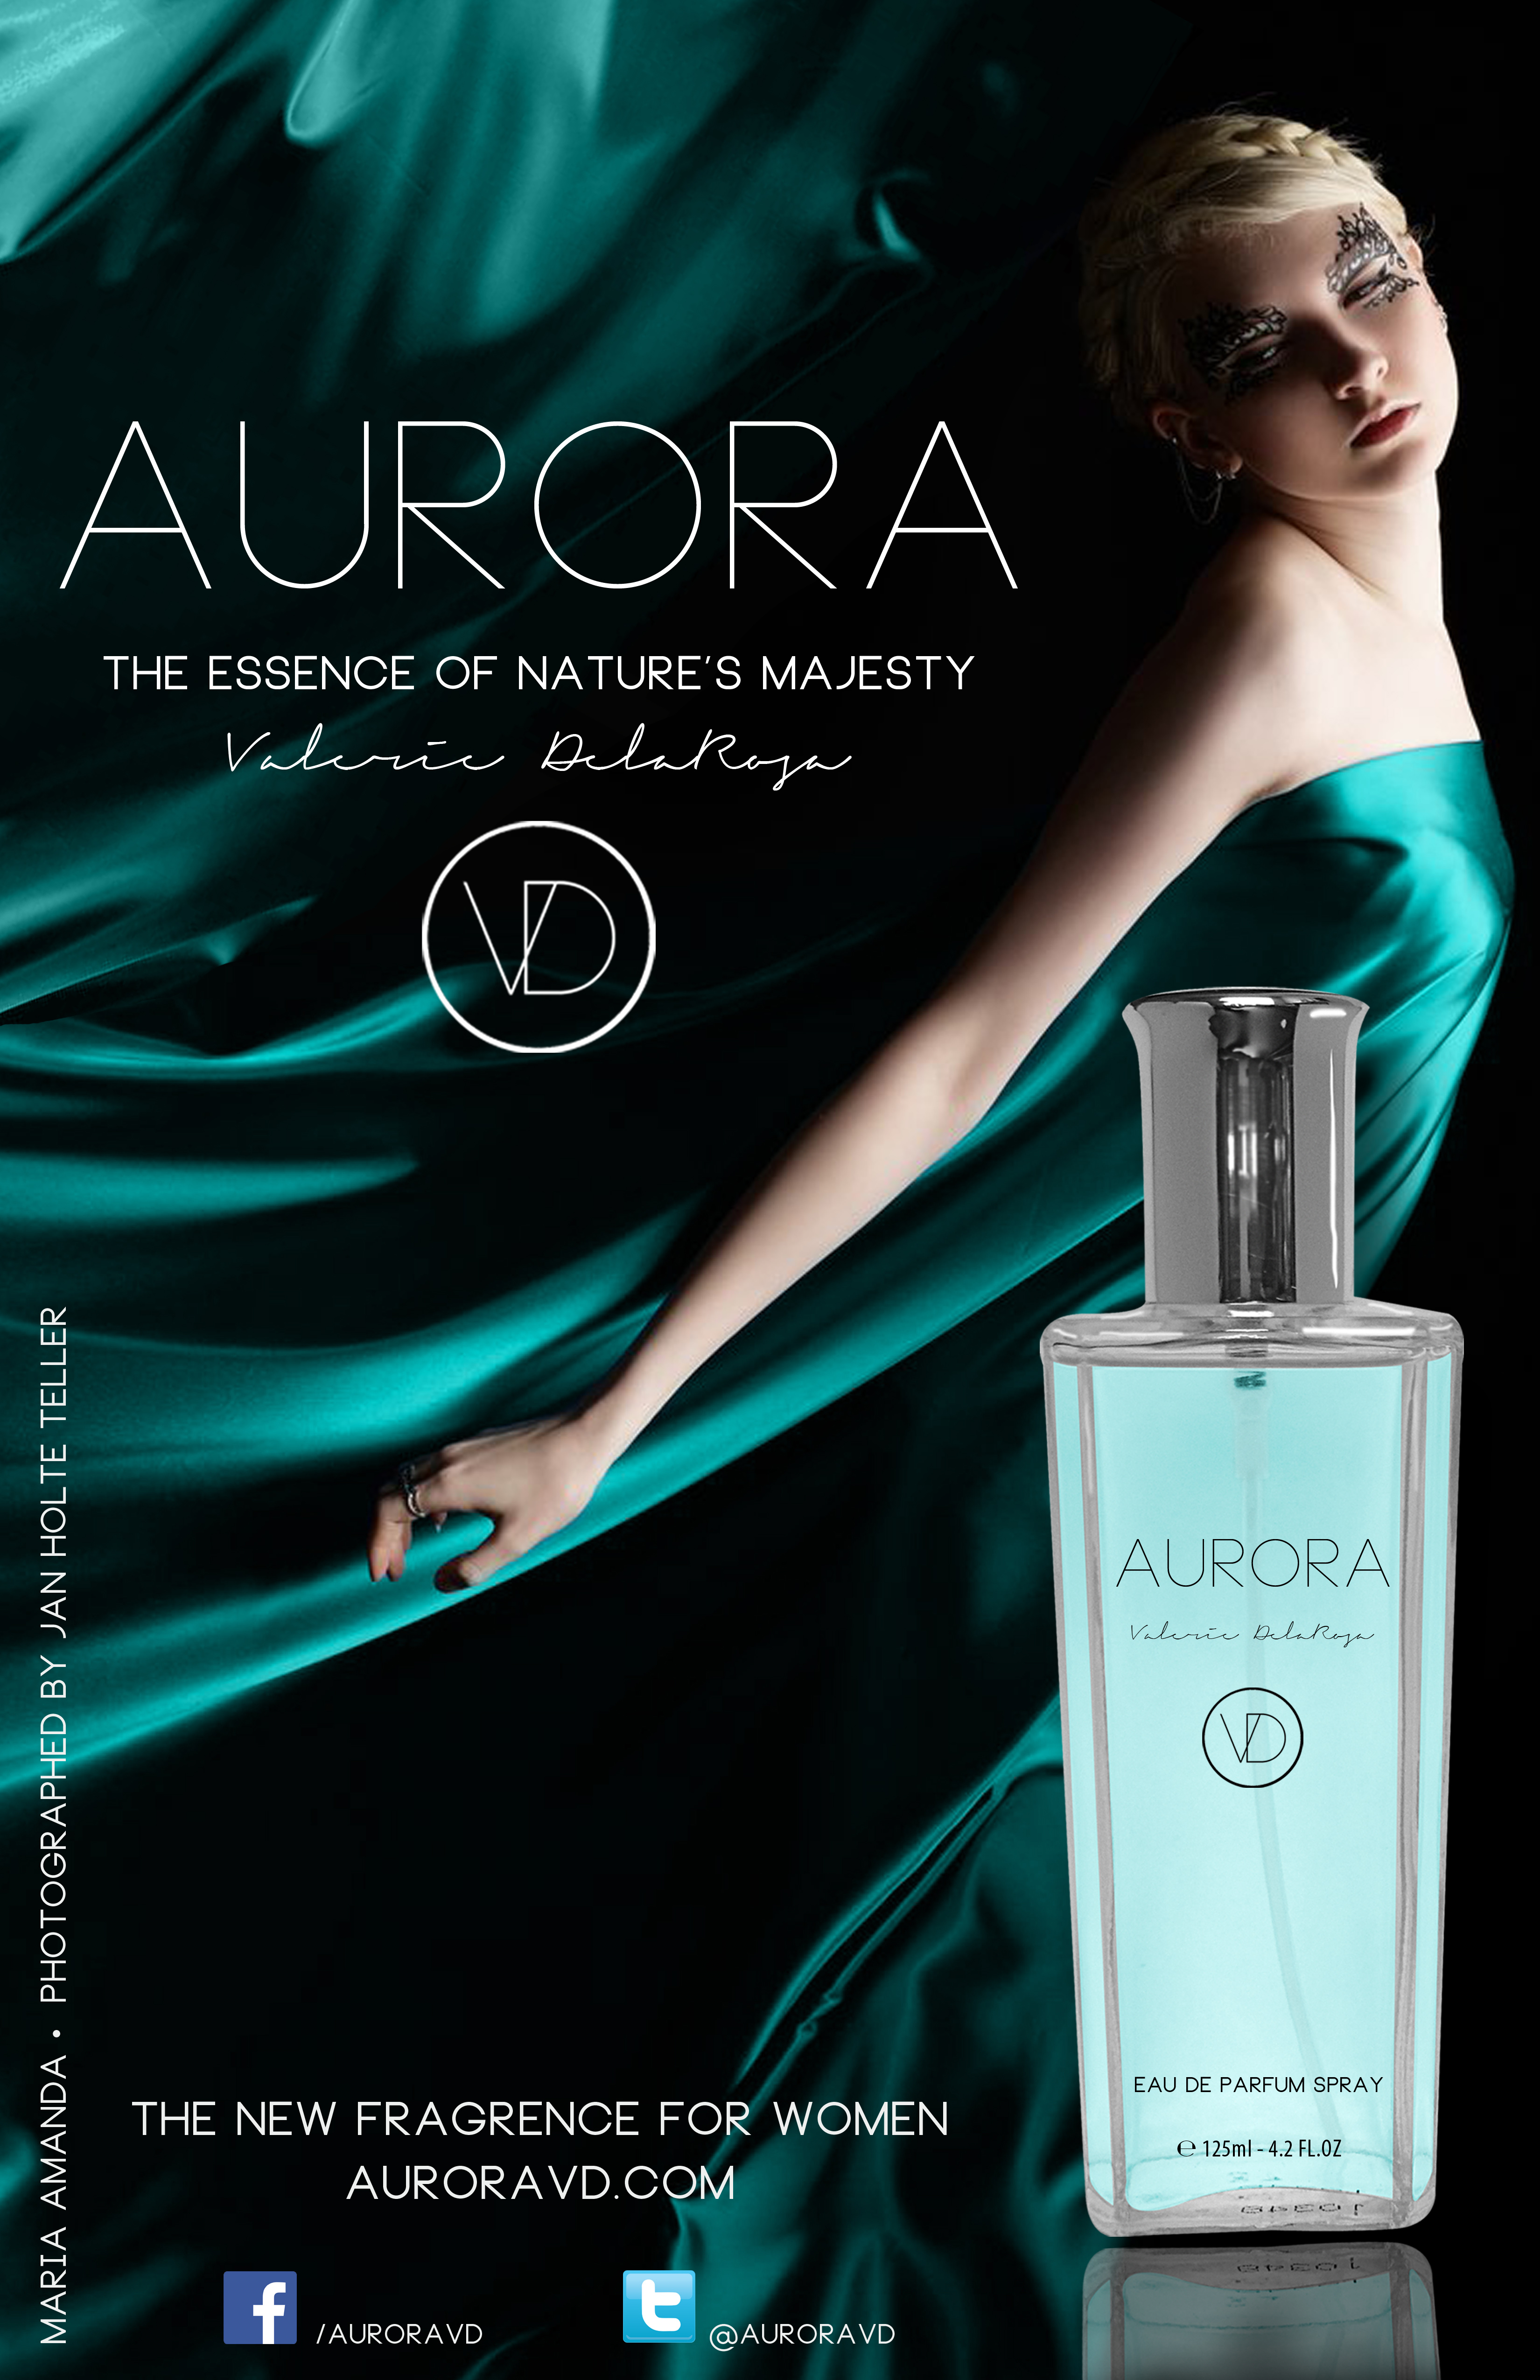 Perfume Ad 1 by Eleyna1 on DeviantArt